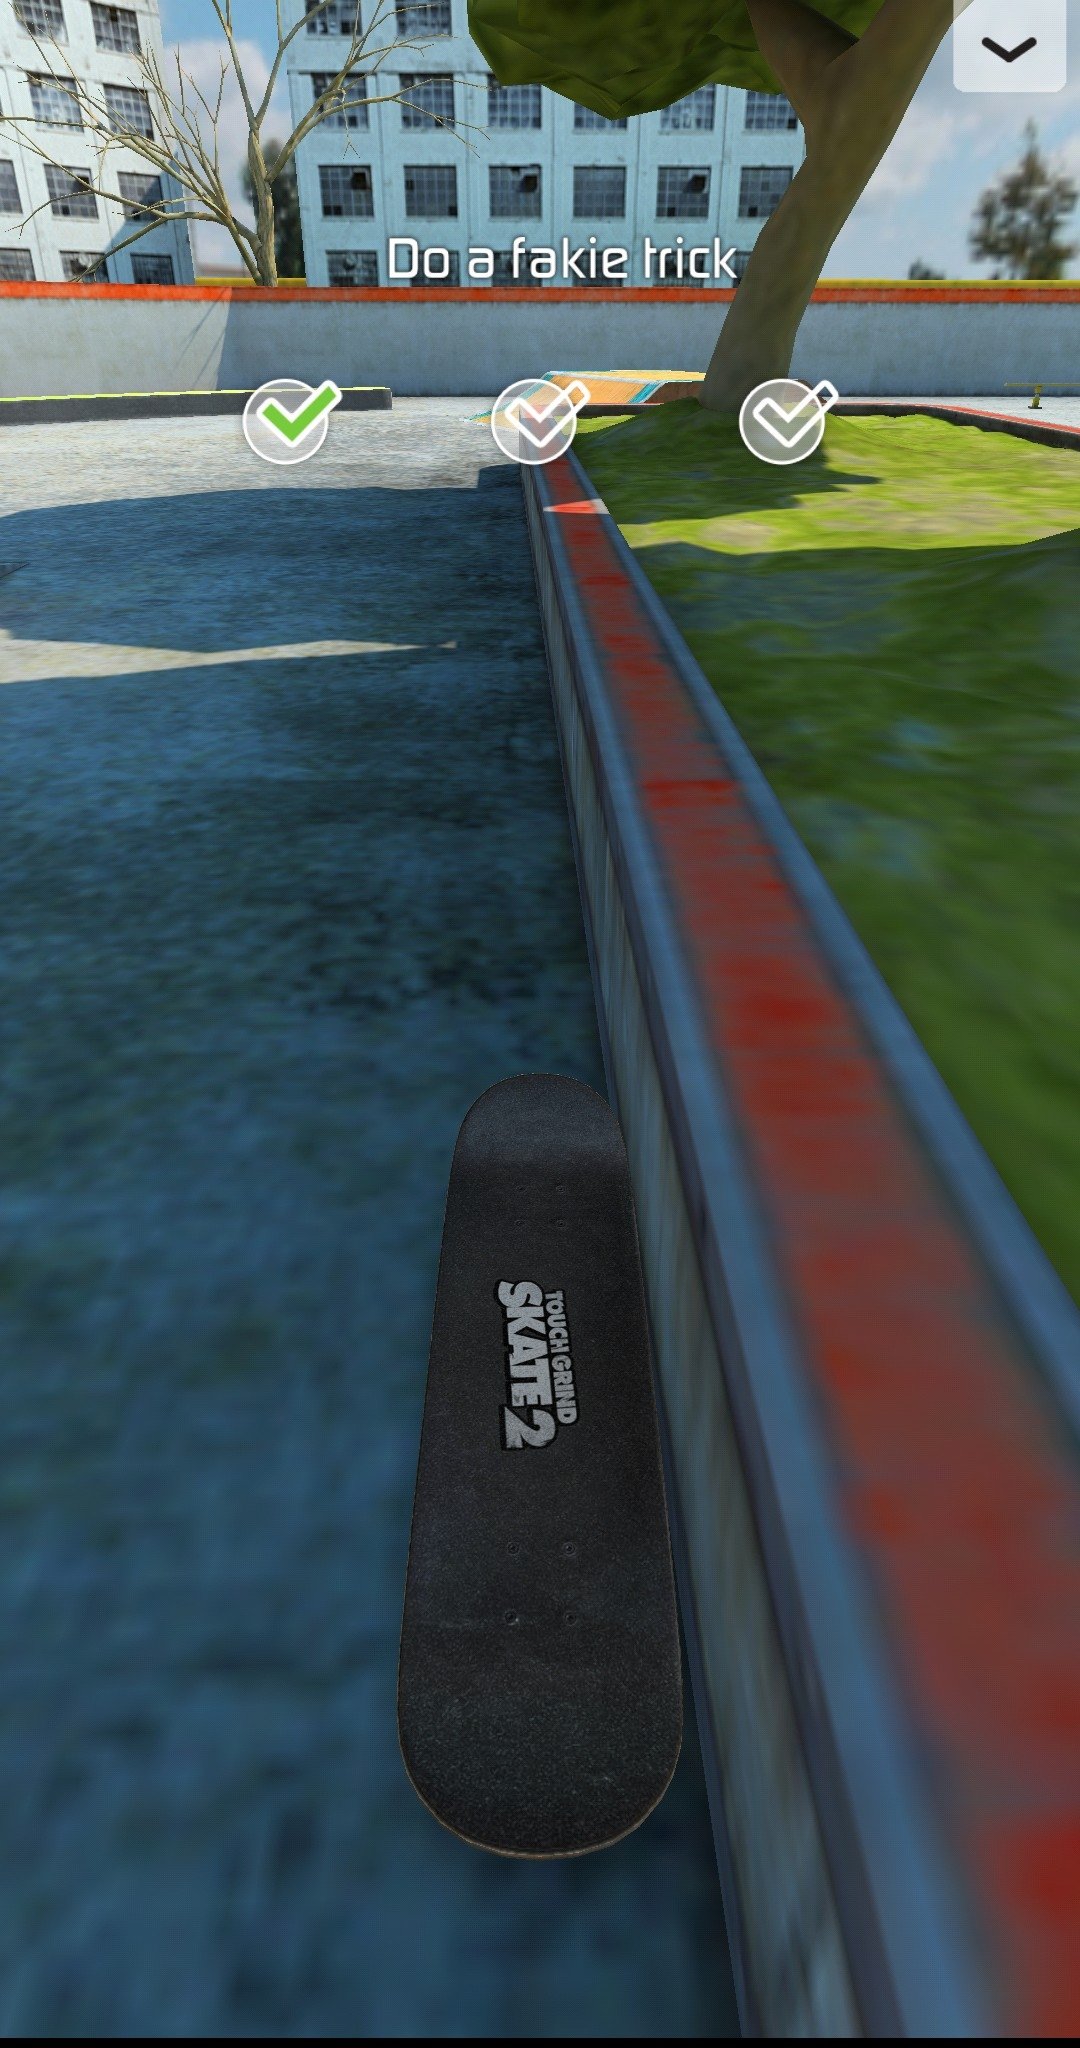 touchgrind skateboard 2